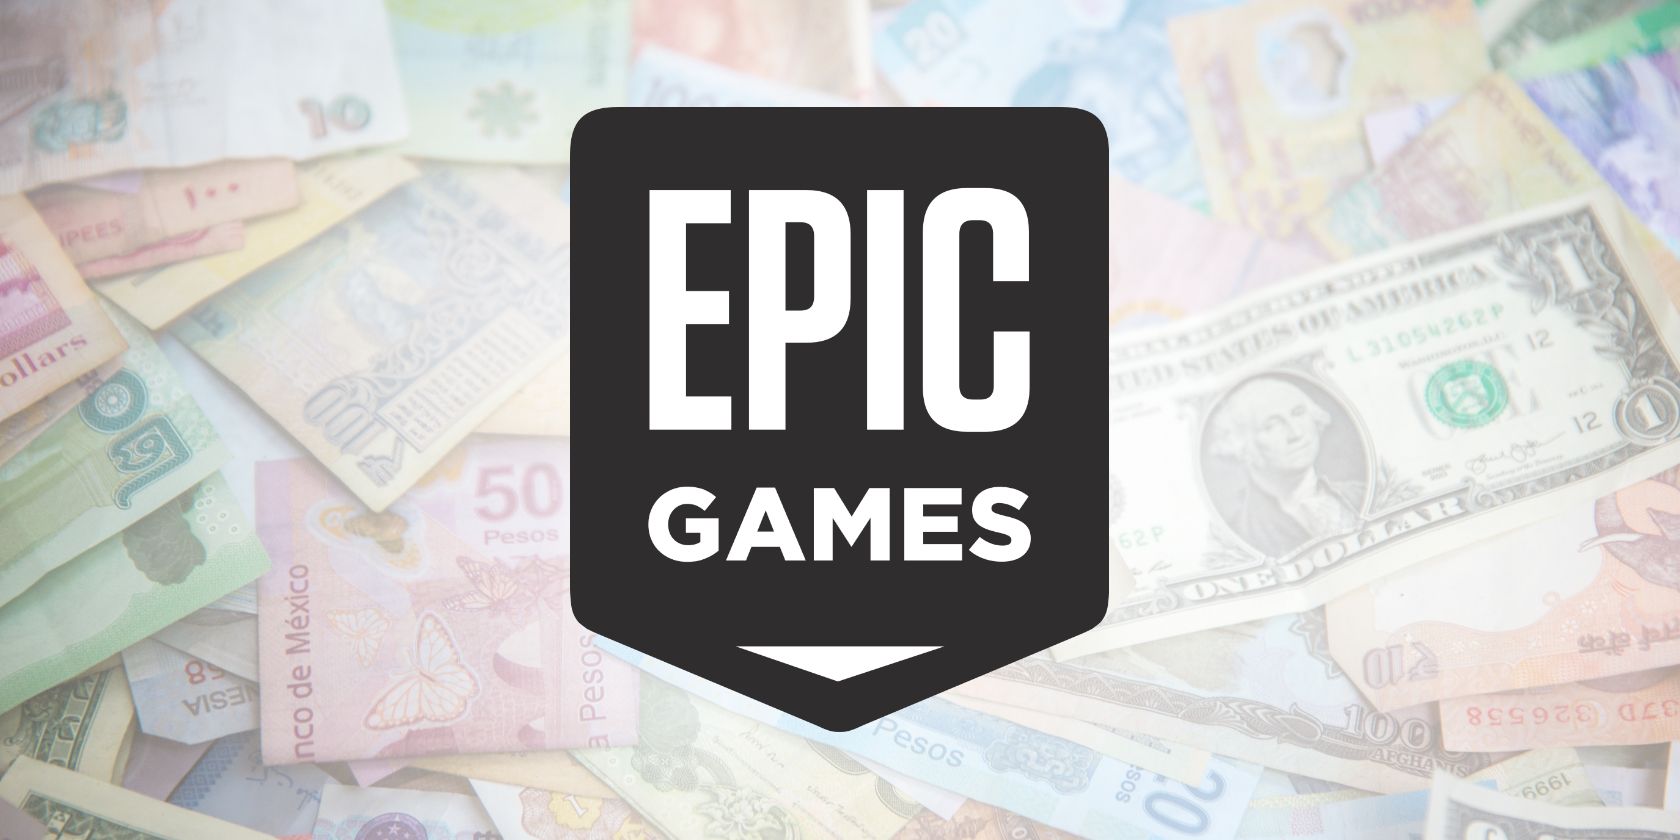 epic games logo on money